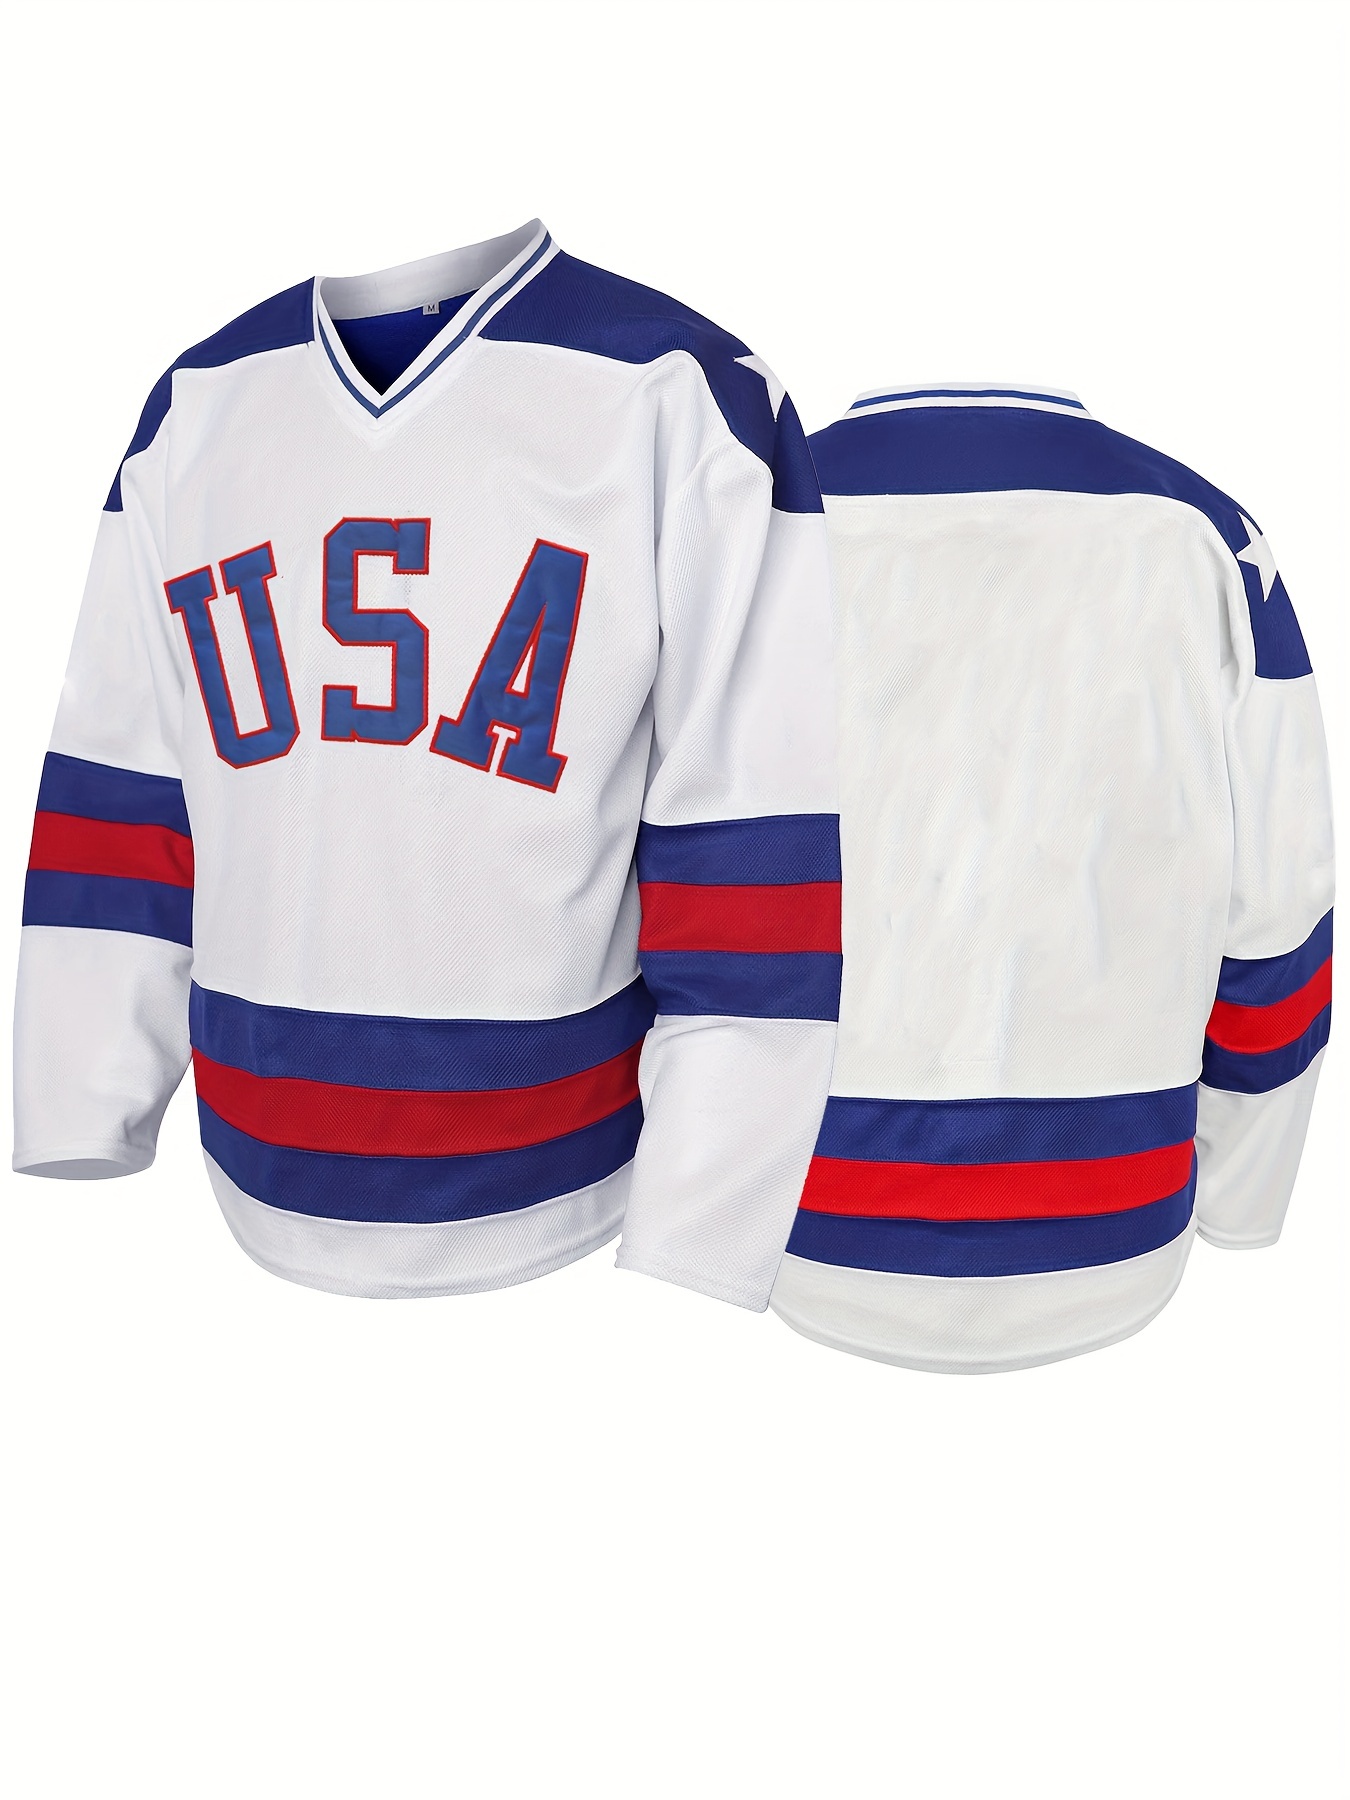 usa hockey Miracle on Ice jersey hoody